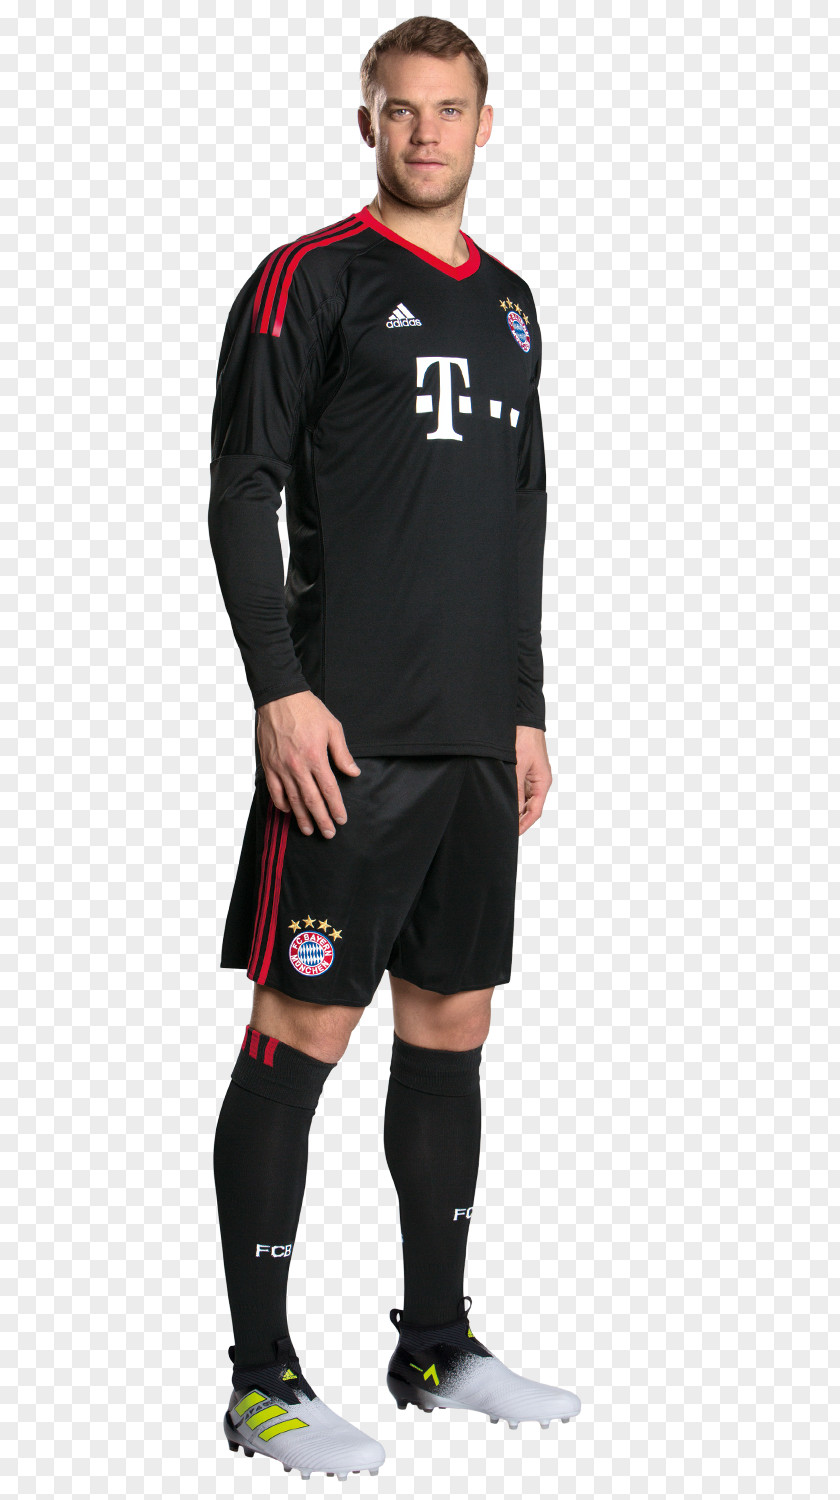 Neuer Manuel FC Bayern Munich Germany National Football Team Goalkeeper PNG